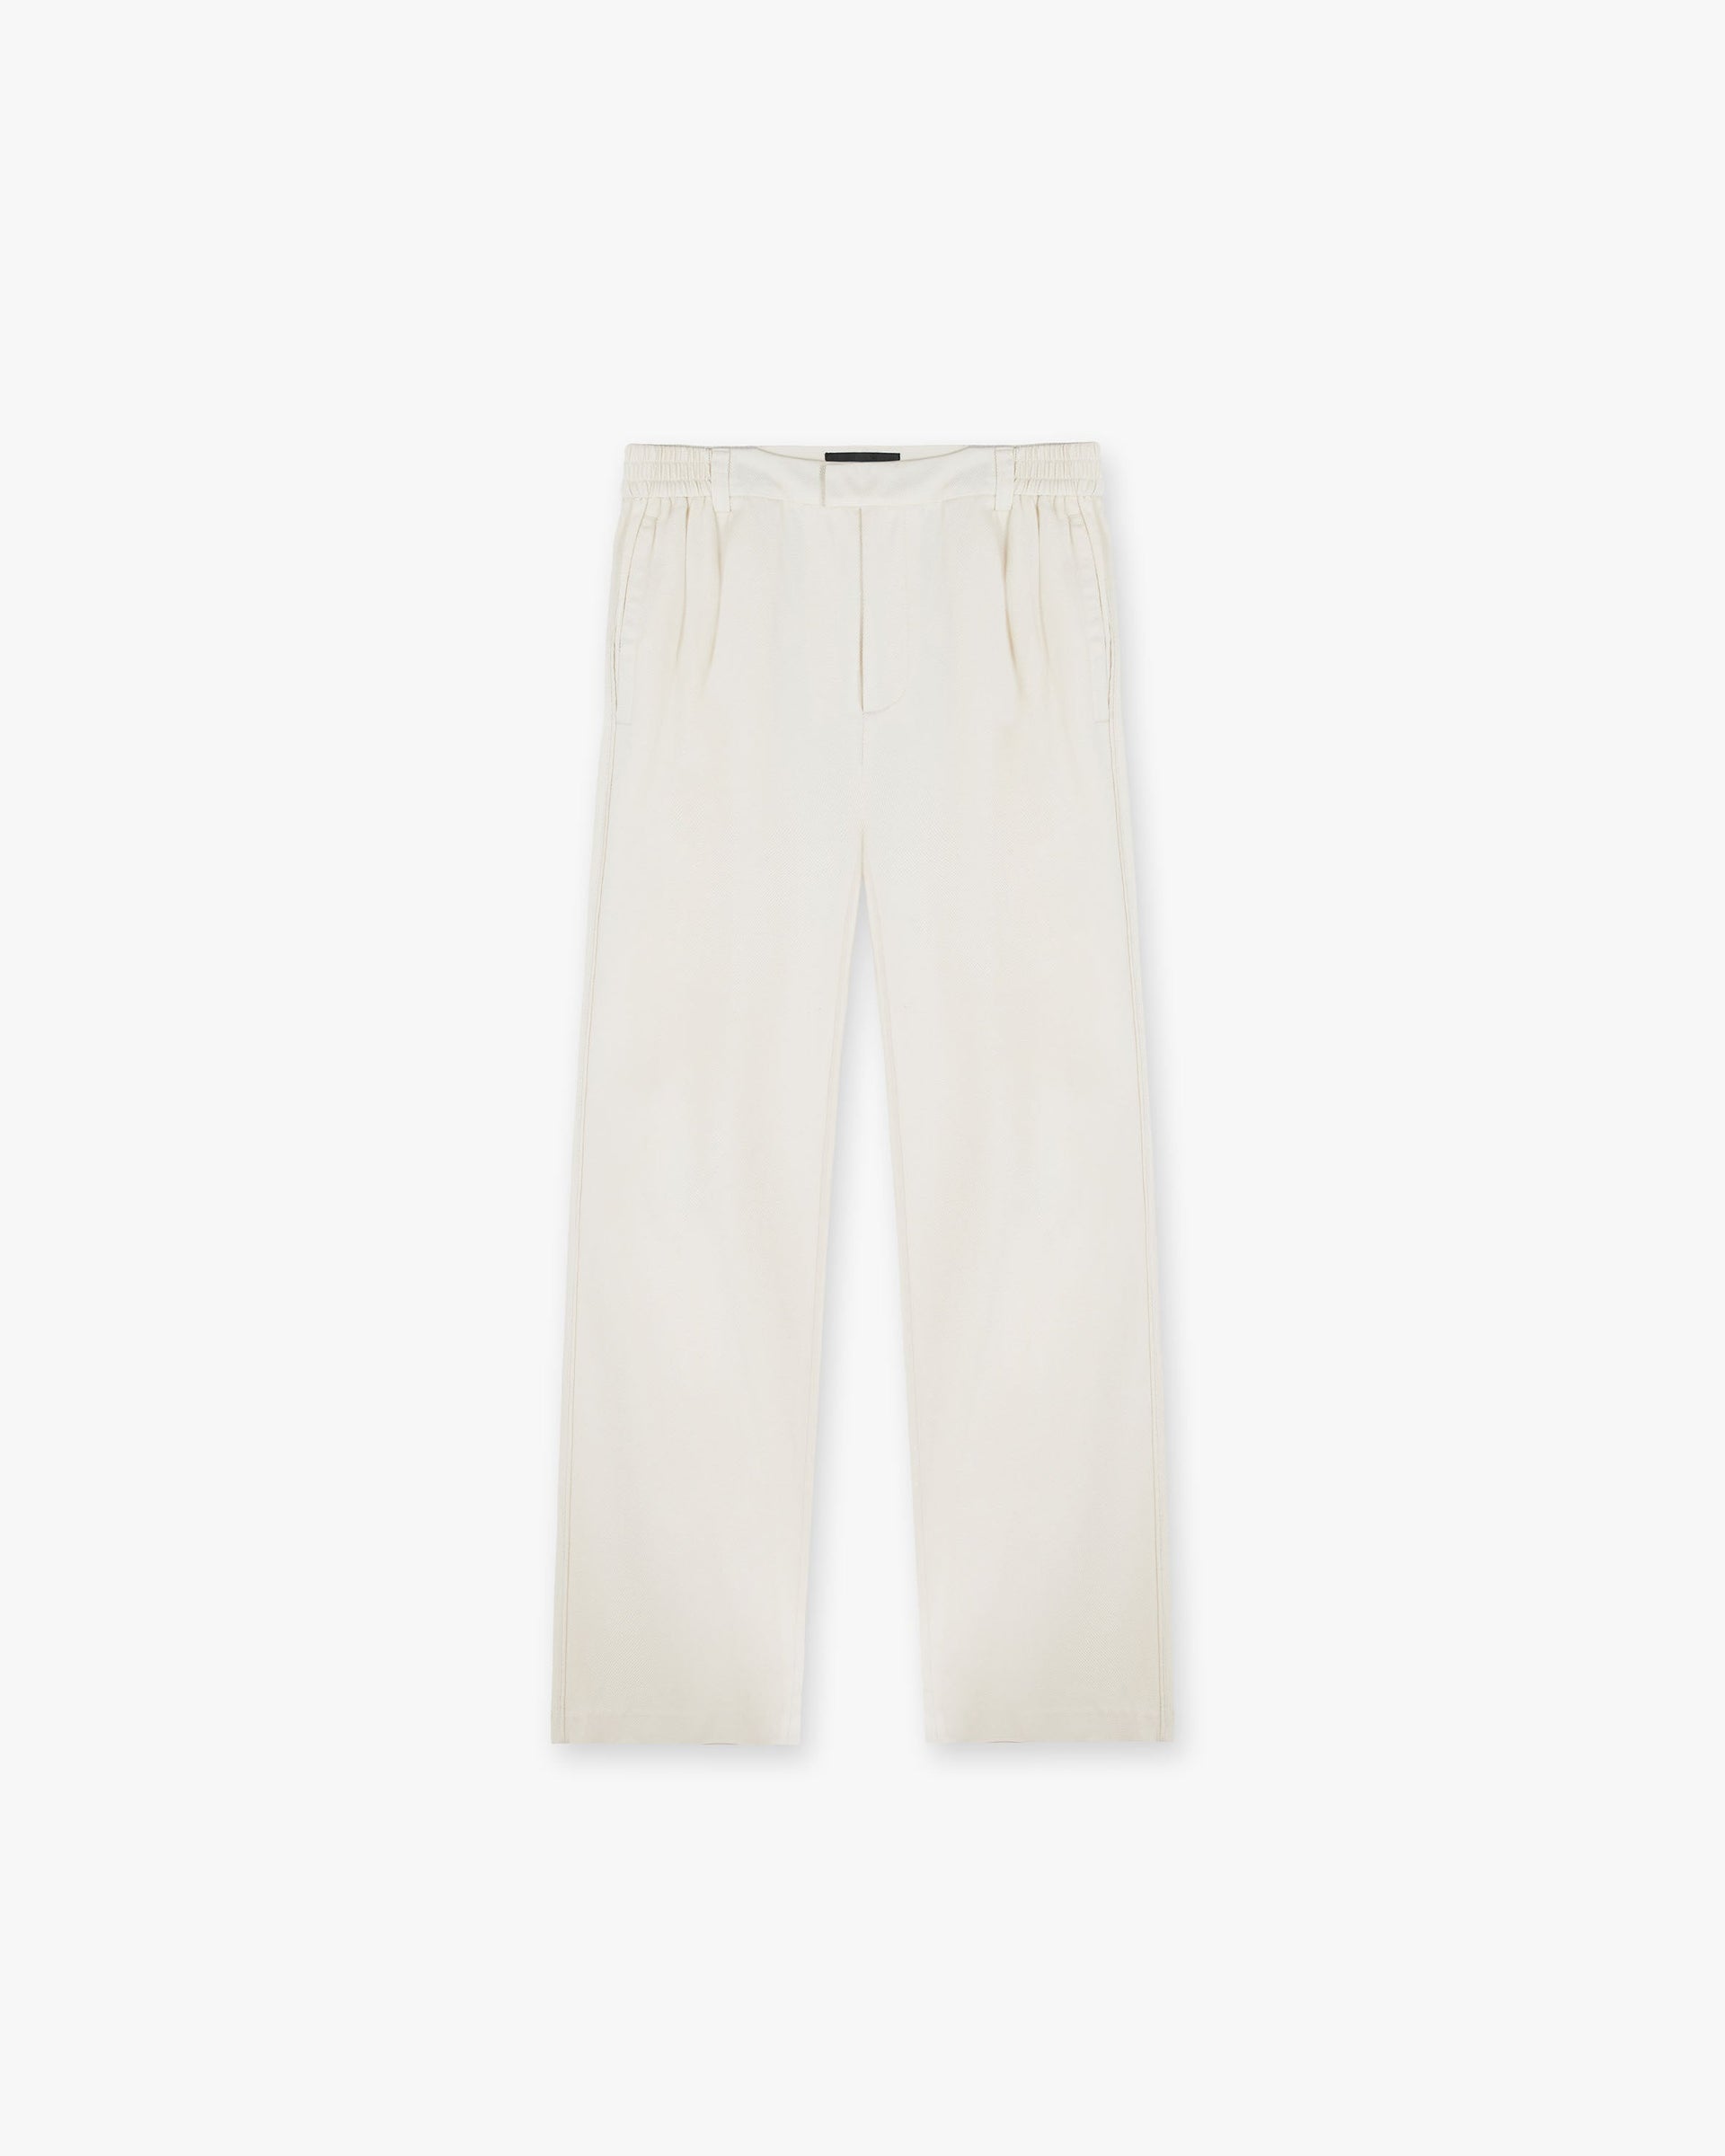 Yacht Pant | Cream Pants SC23 | Represent Clo